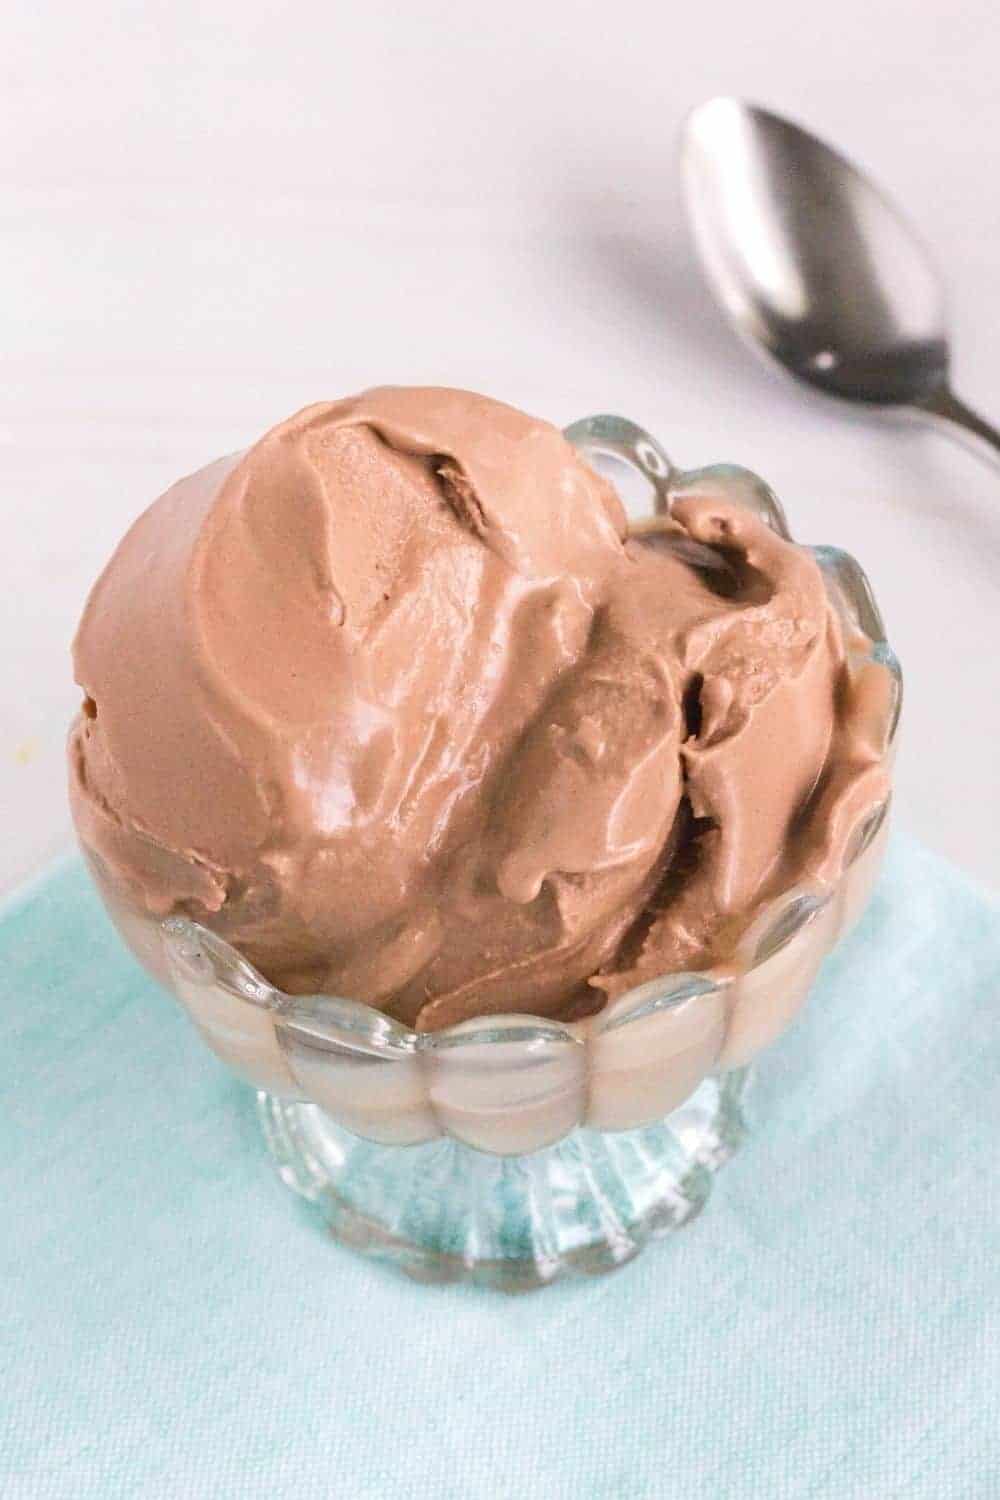 A bowl of chocolate ice cream on a napkin.